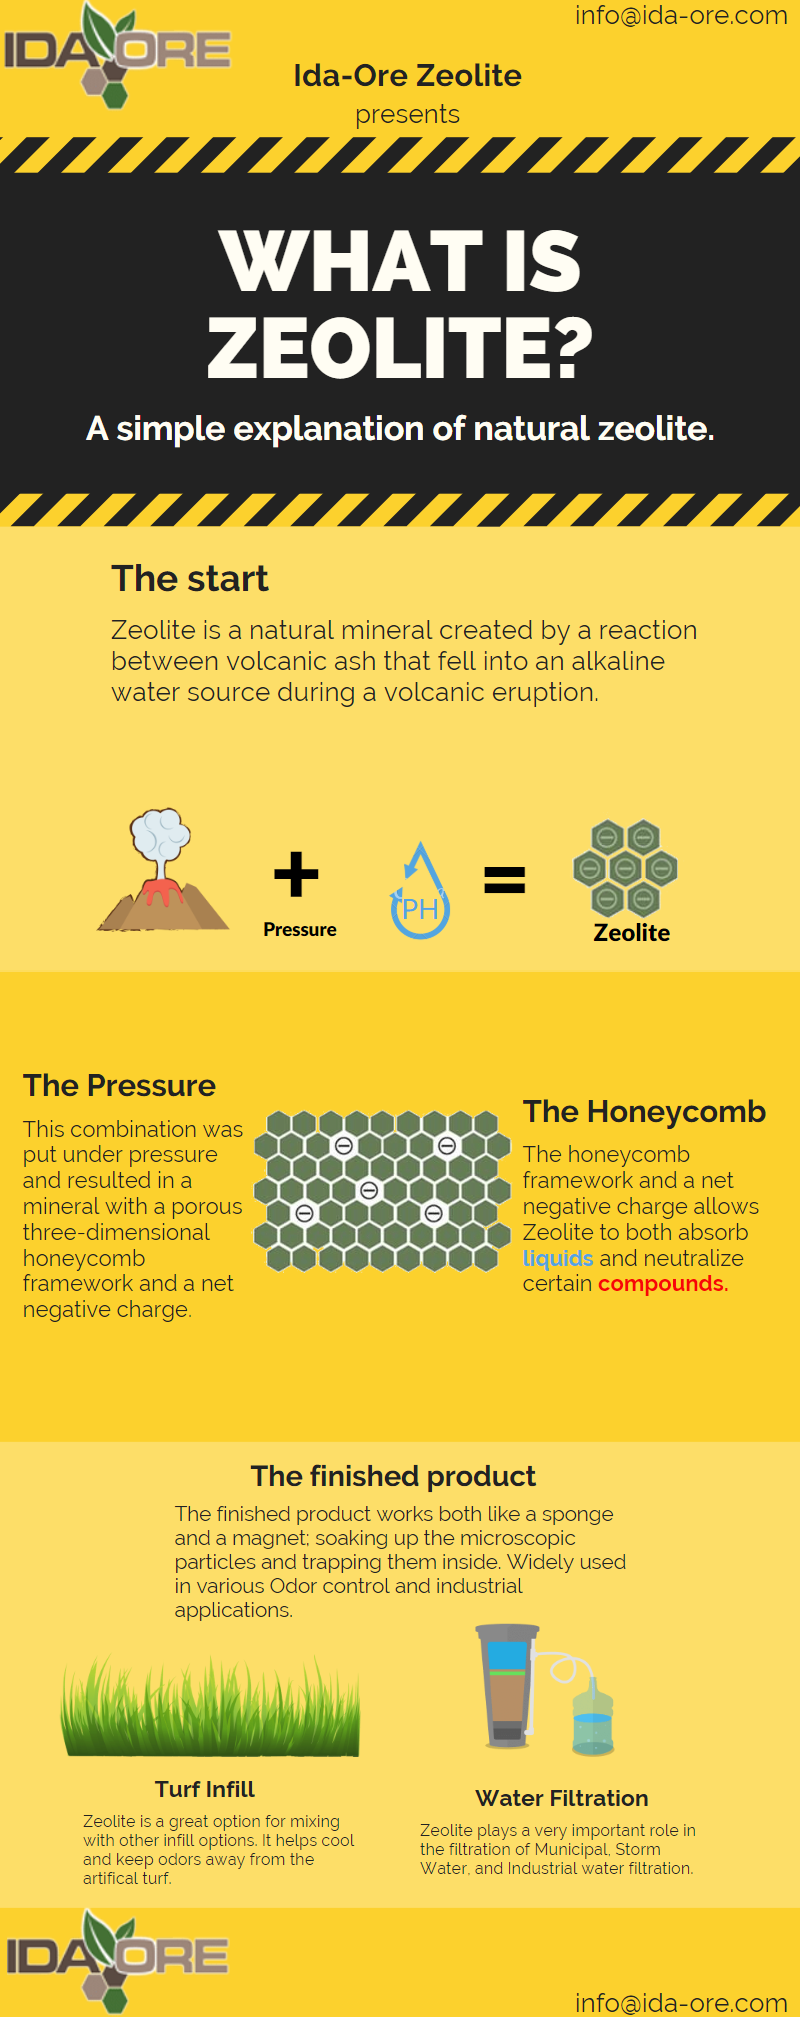 What is Zeolite?